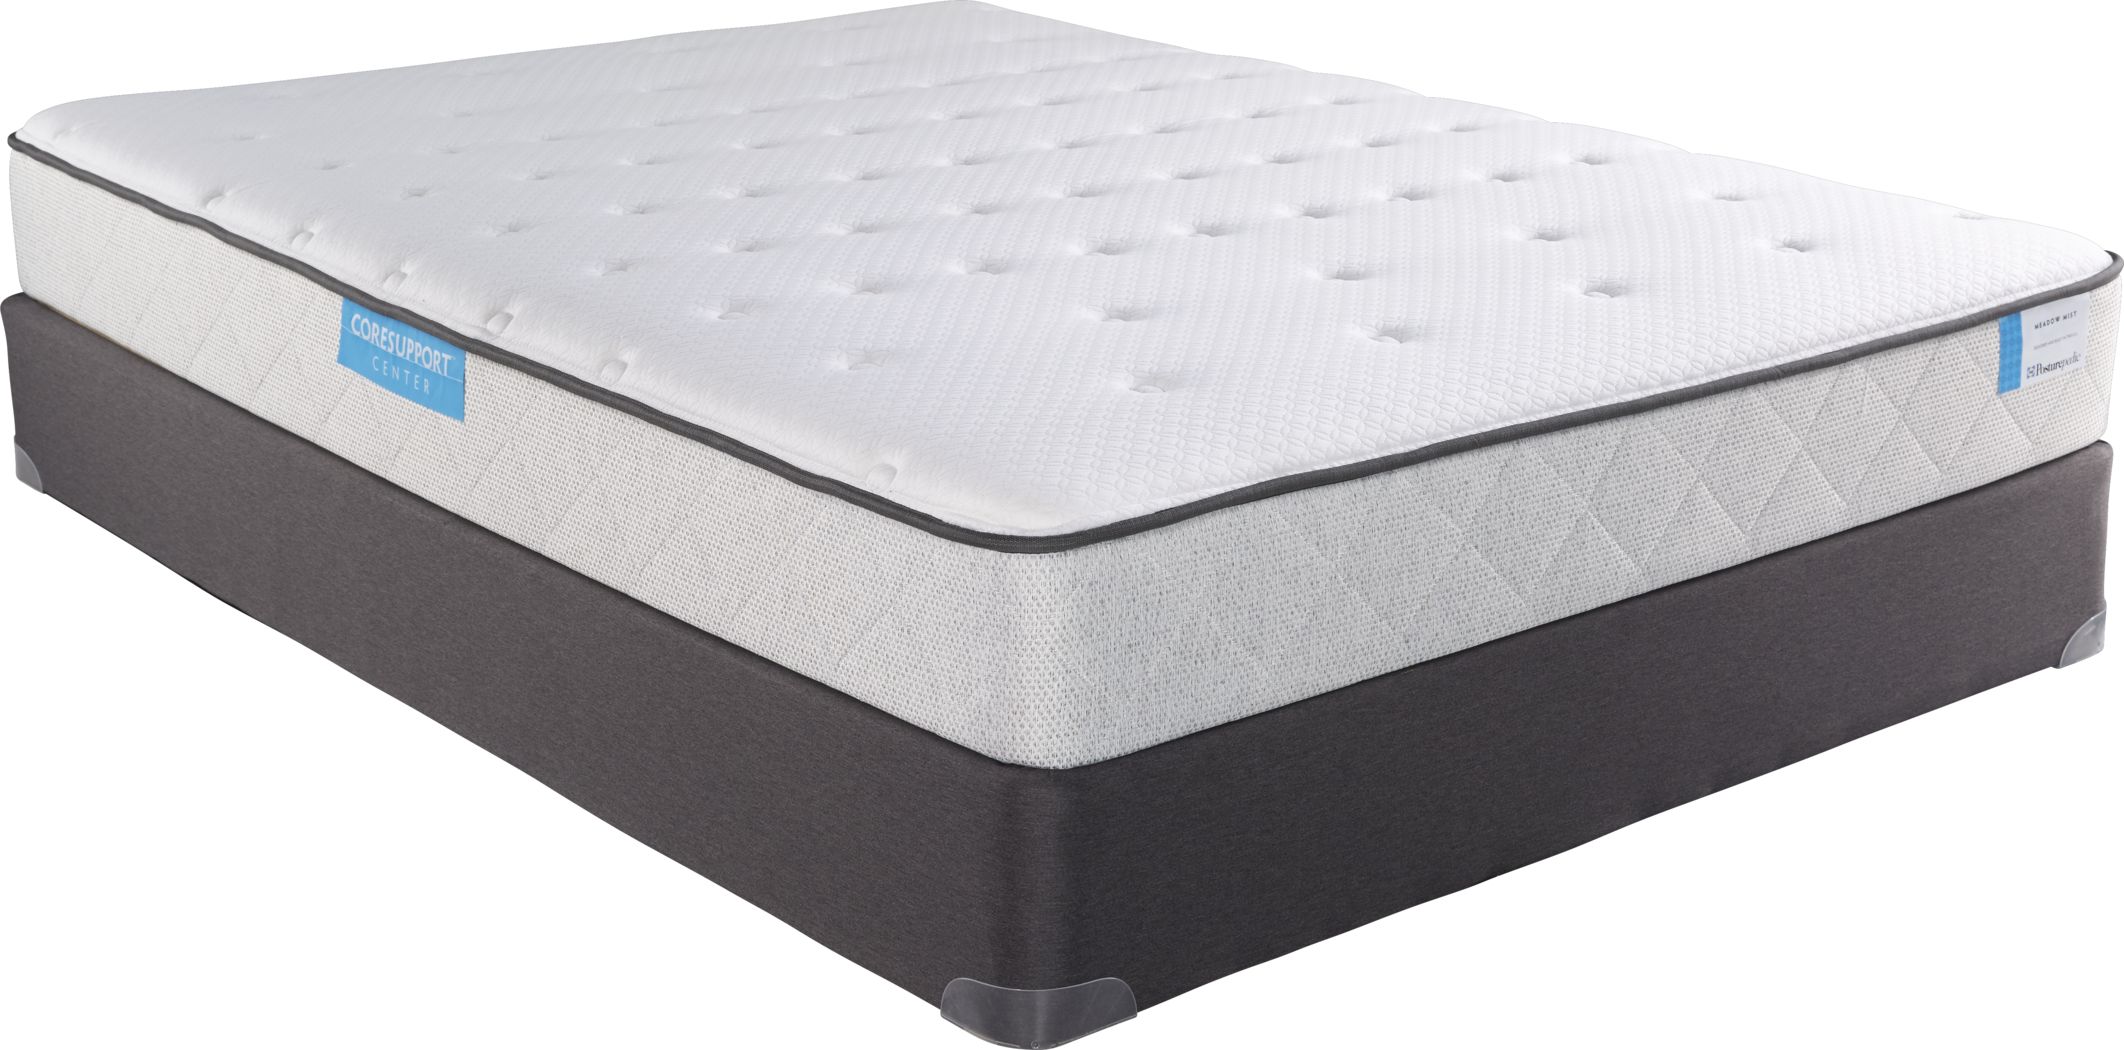 sealy meadow mist mattress reviews